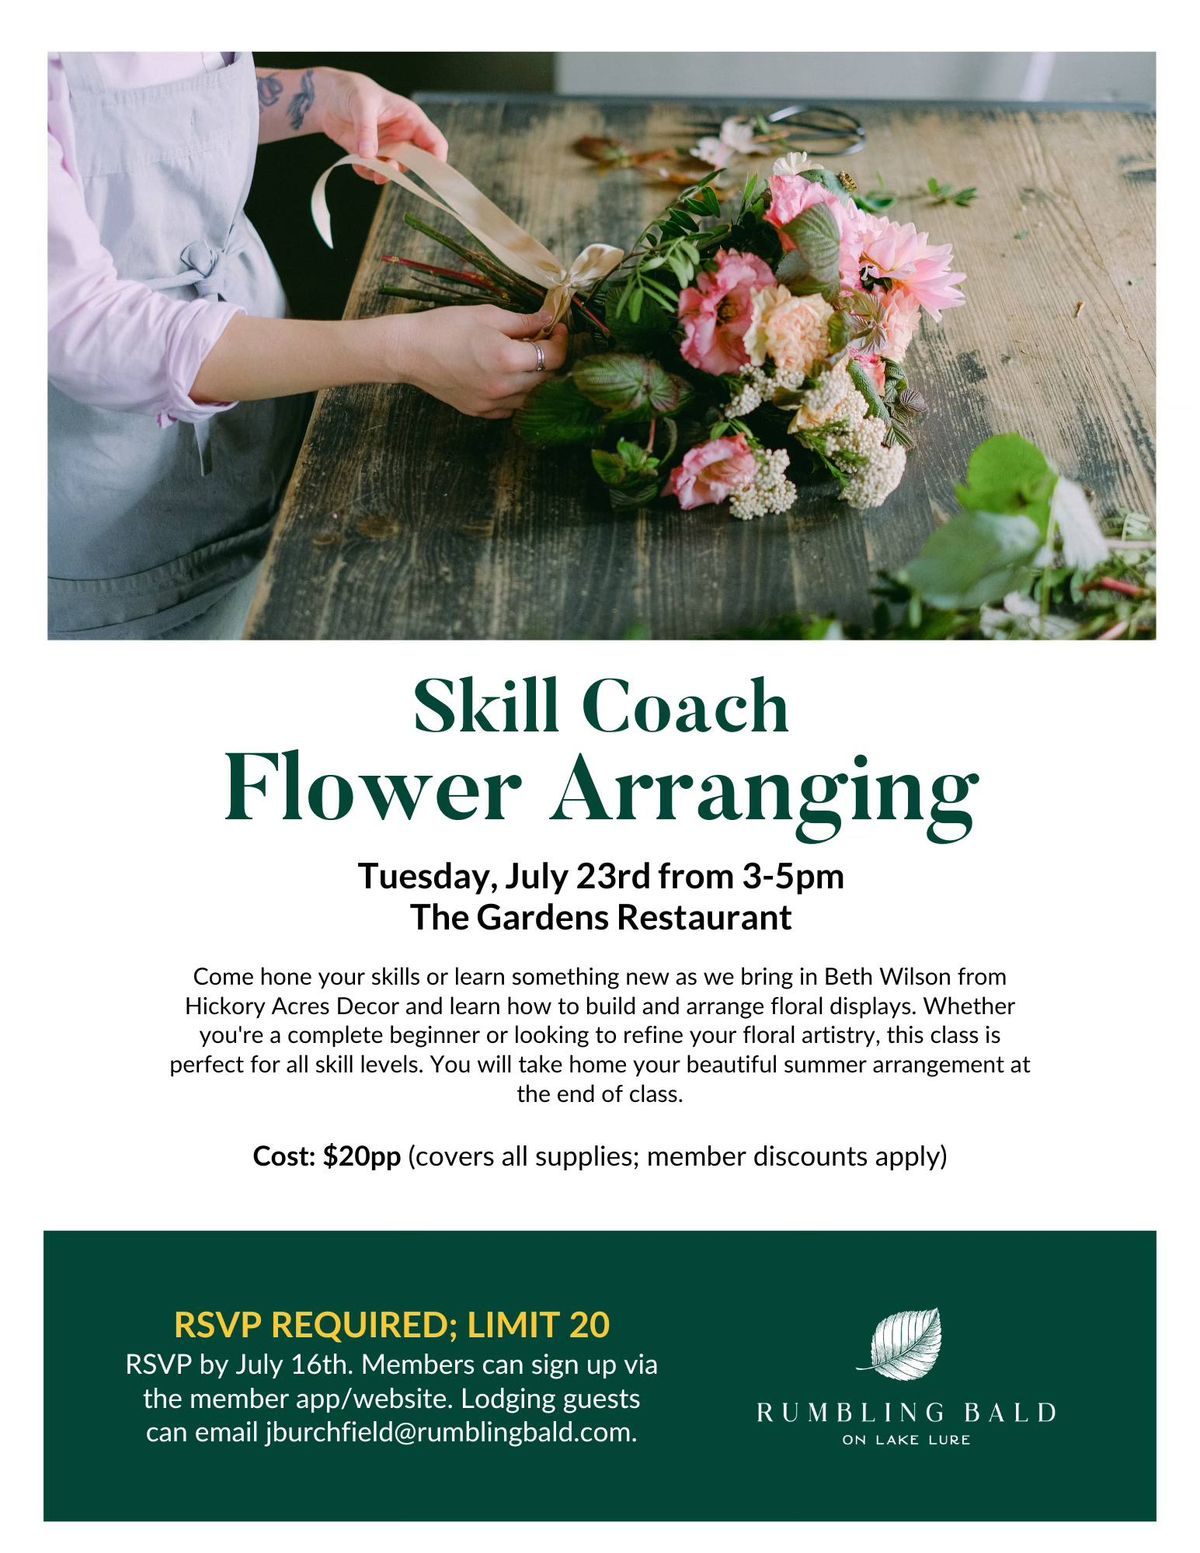 Skill Coach - Flower Arranging